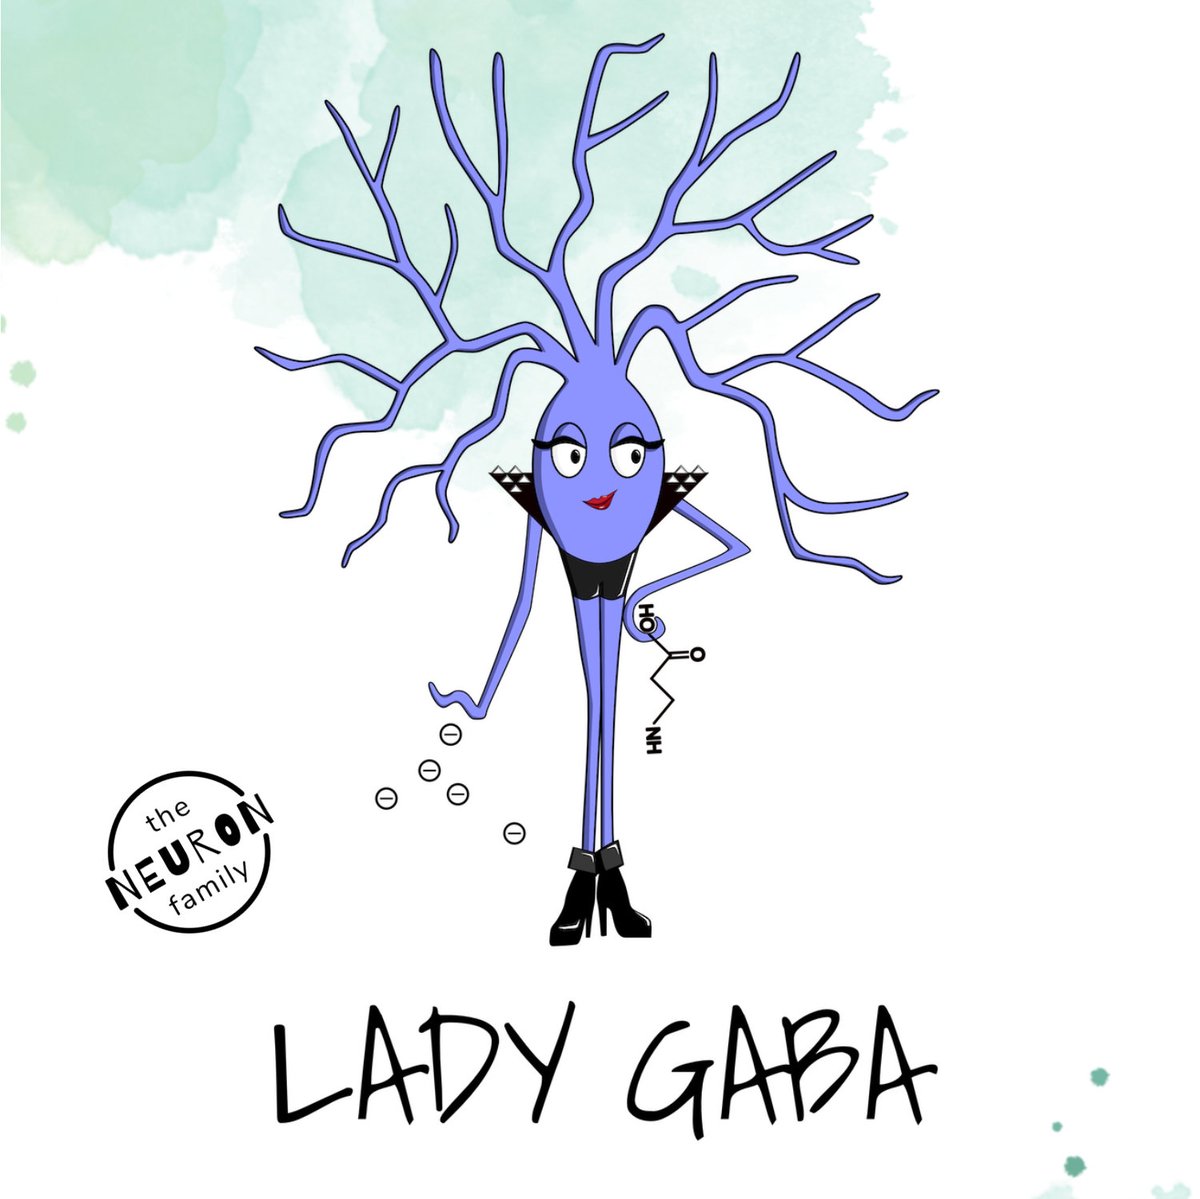 Hello from Lady GABA! GABA (Gamma-Aminobutyric Acid) is an inhibitory neurotransmitter. GABA decreases the activity of neurons that have the GABA receptor. Lady GABA is inspired from Lady GAGA and is releasing the neurotransmitter GABA. thebraincolouringbook.com